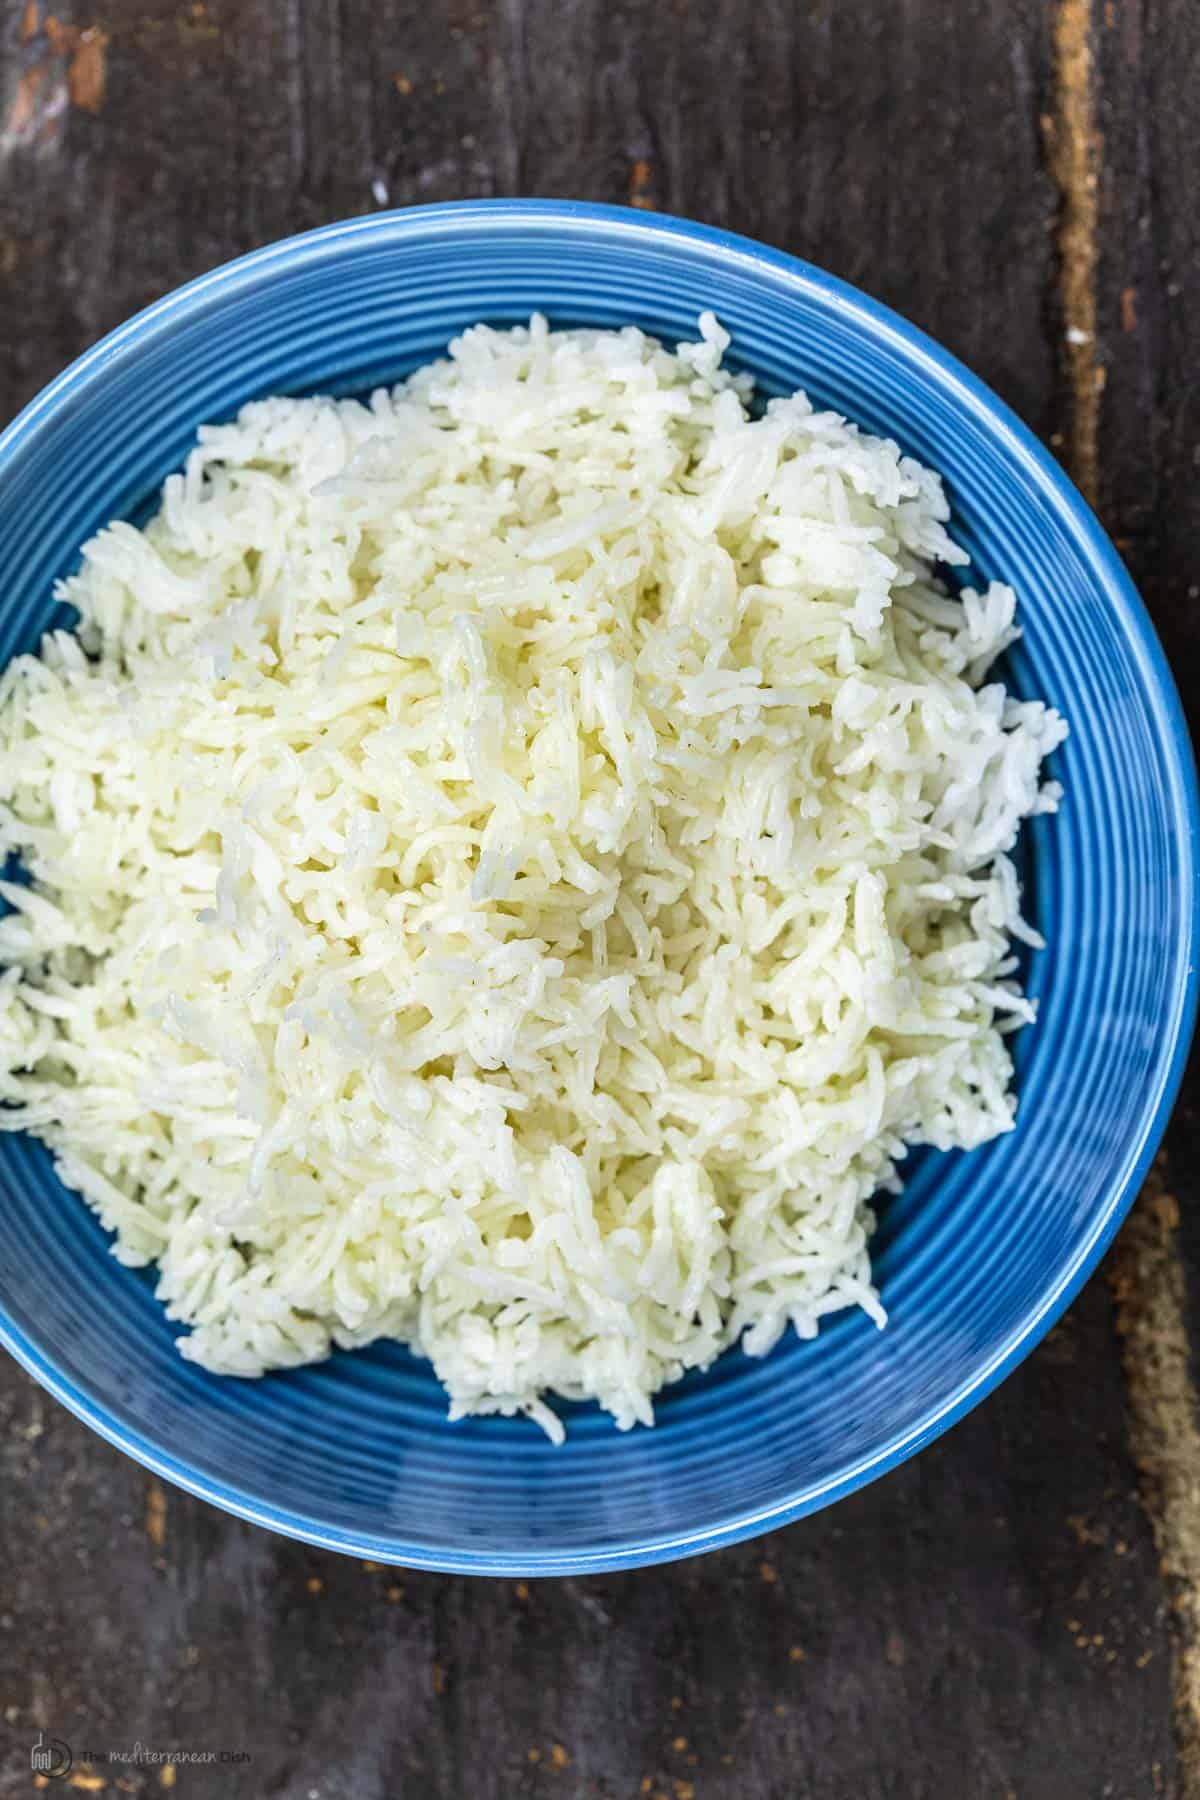 A blue plate of basmati rice